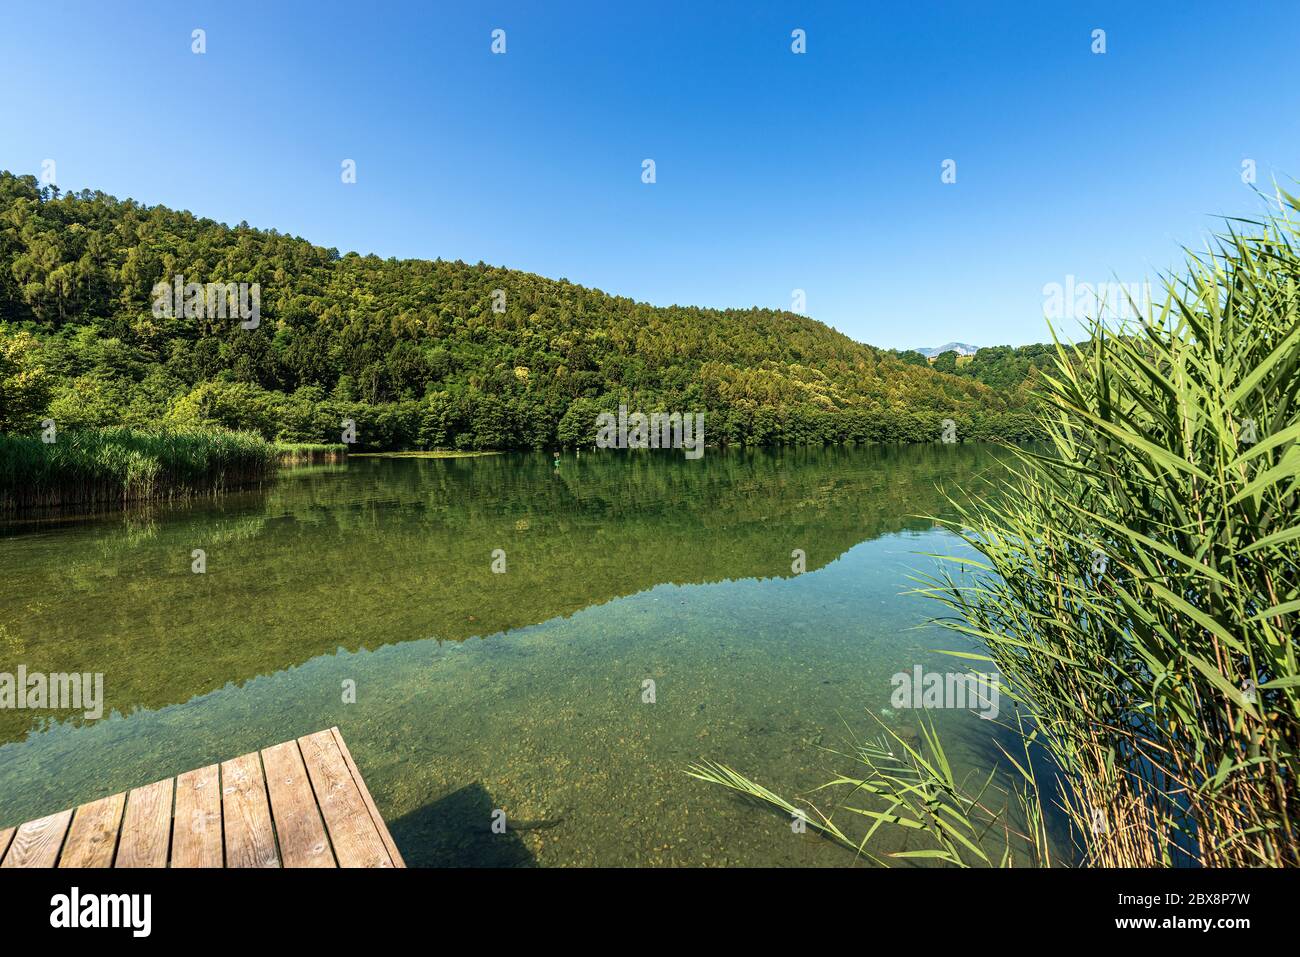 Lago di Levico, small beautiful lake in Italian Alps, Valsugana valley, Levico Terme town, Trento province, Trentino Alto Adige, Italy, Europe Stock Photo